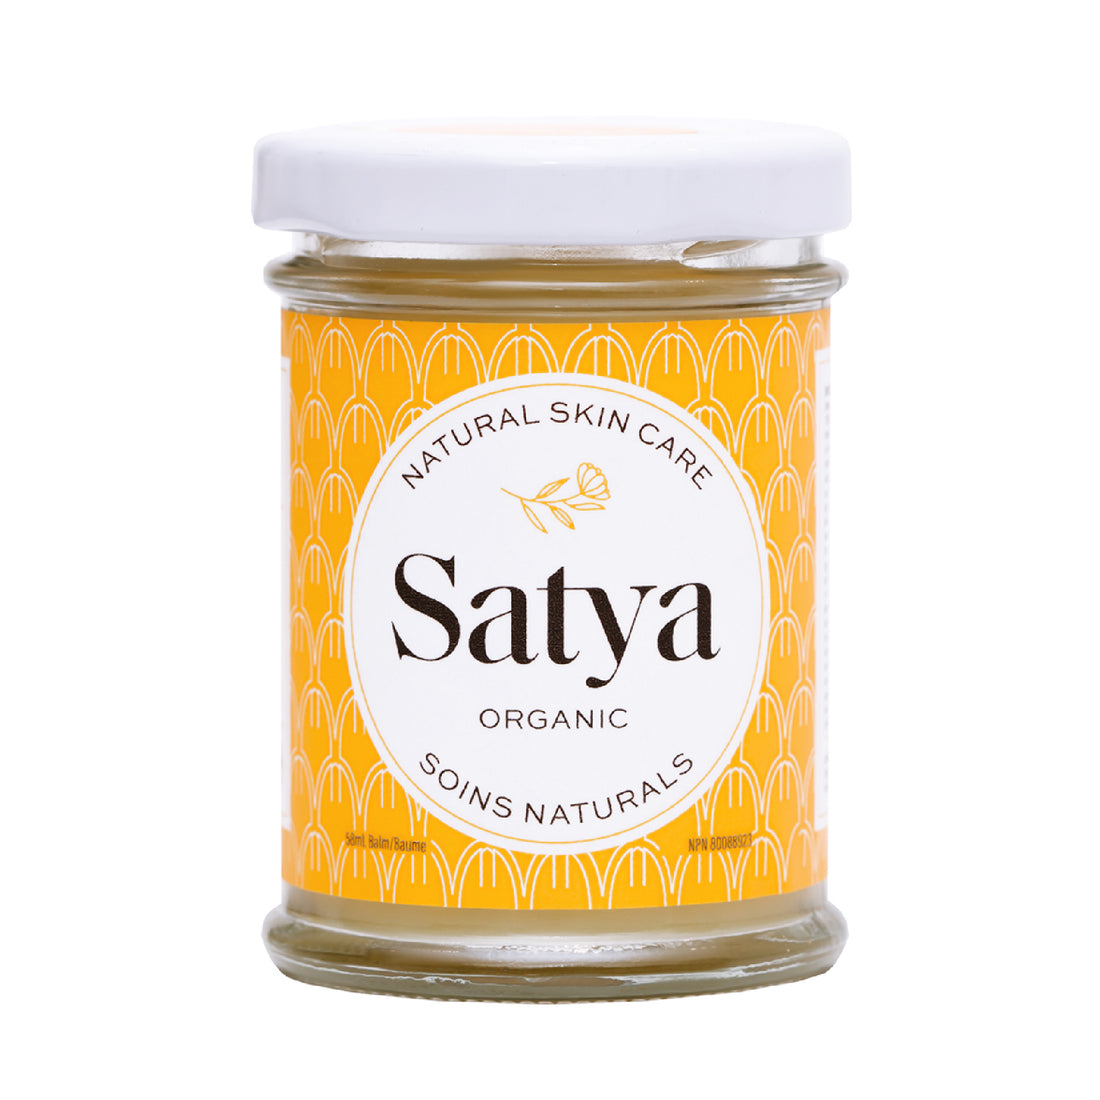 Satya Organic Eczema Relief 50ml